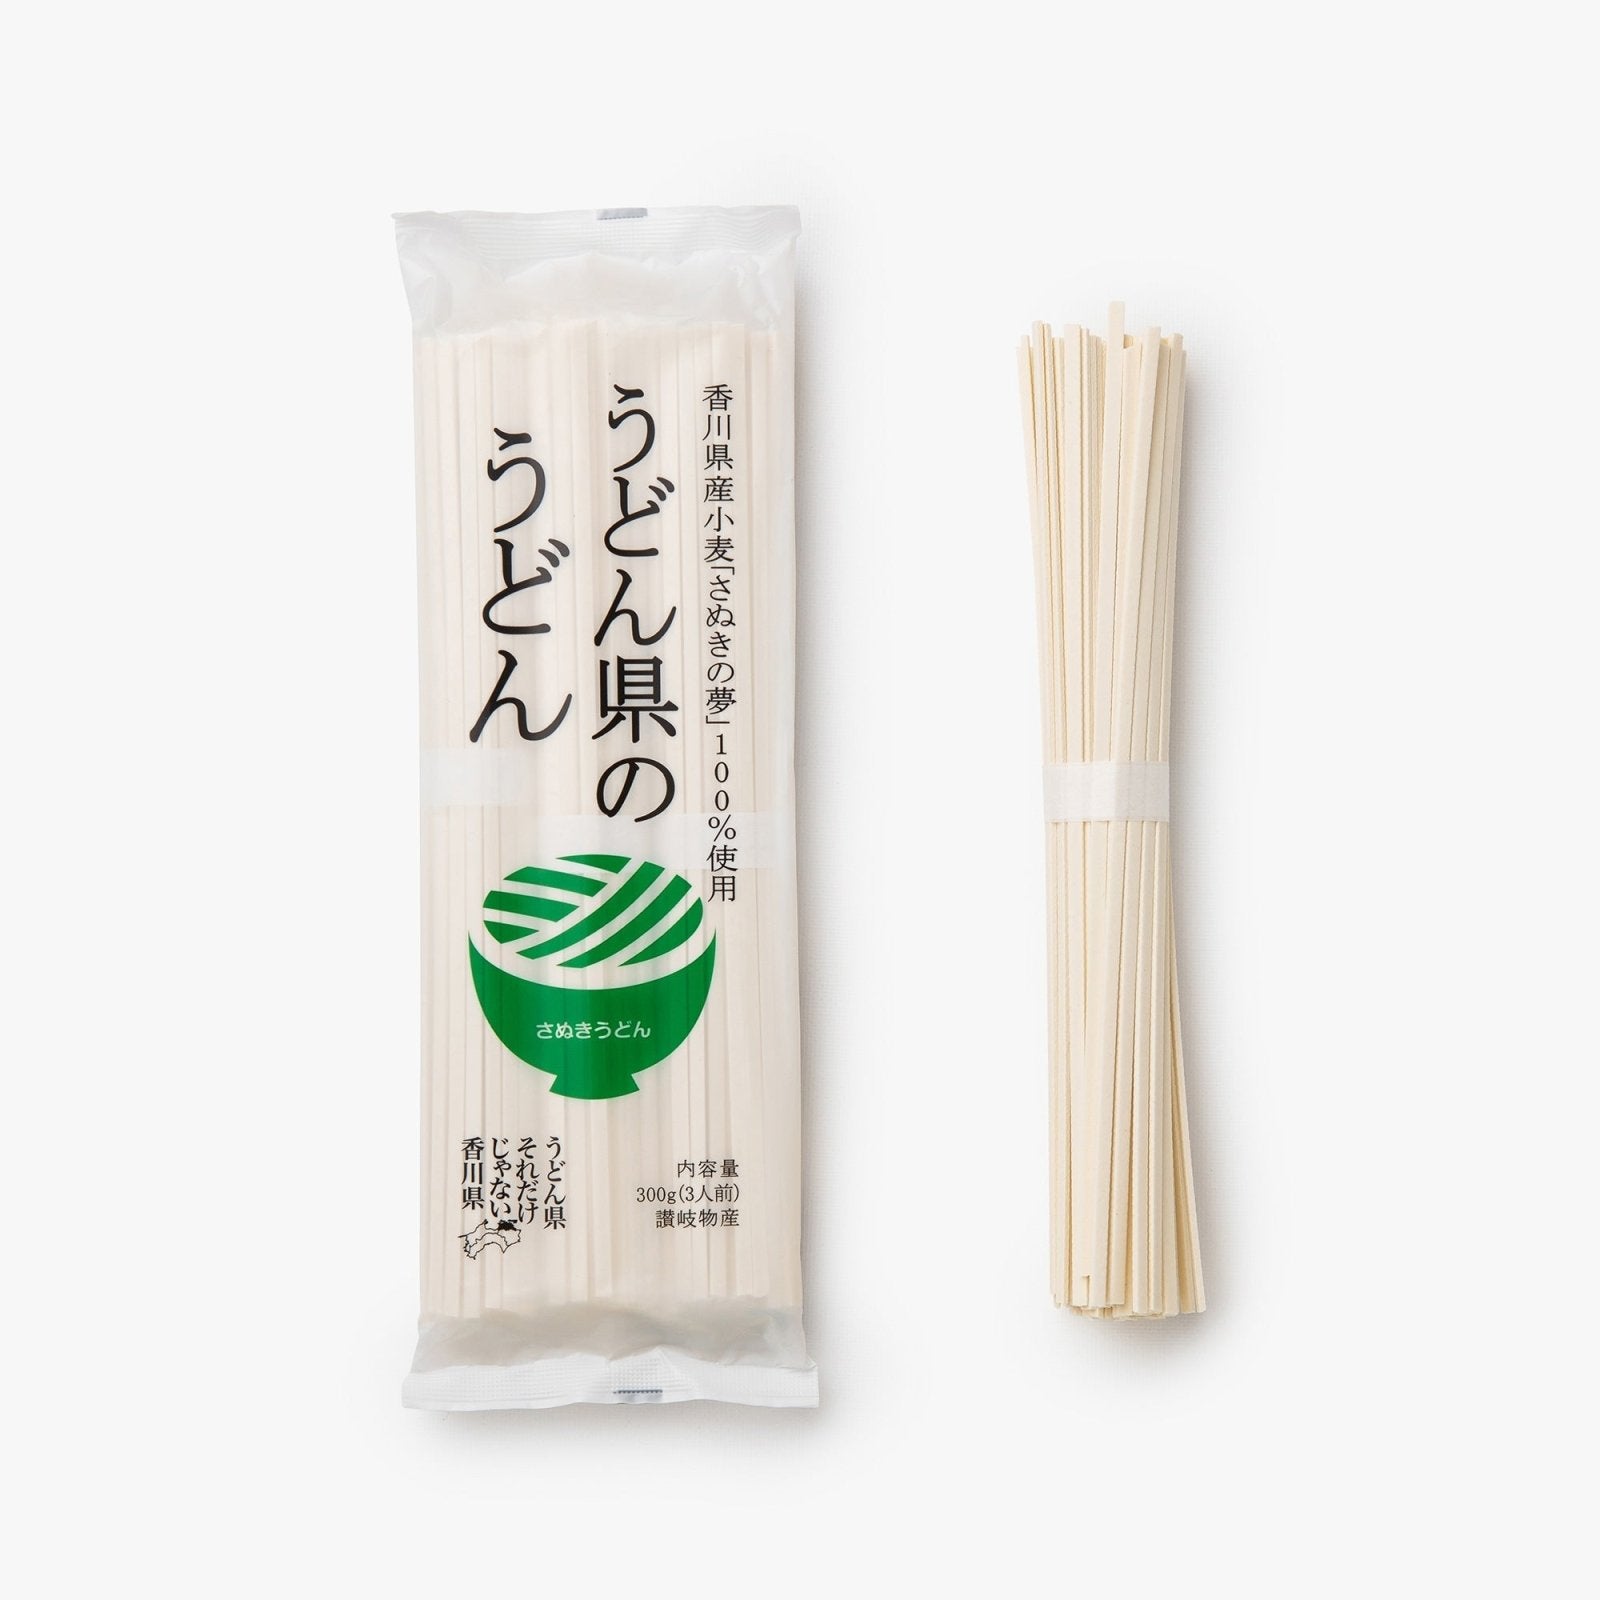 Nouilles de blé de kagawa - 300g - Sanuki Bussan - iRASSHAi